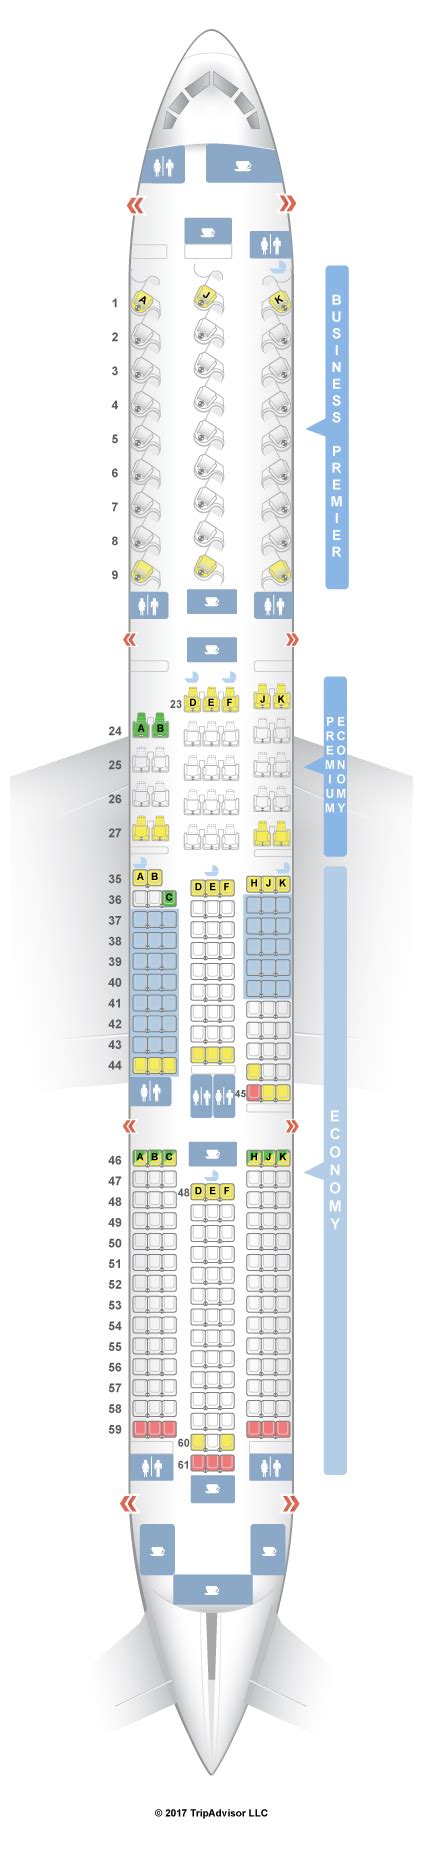 Seatguru Seat Map Air New Zealand Boeing 787 9 V2 789 Seatguru